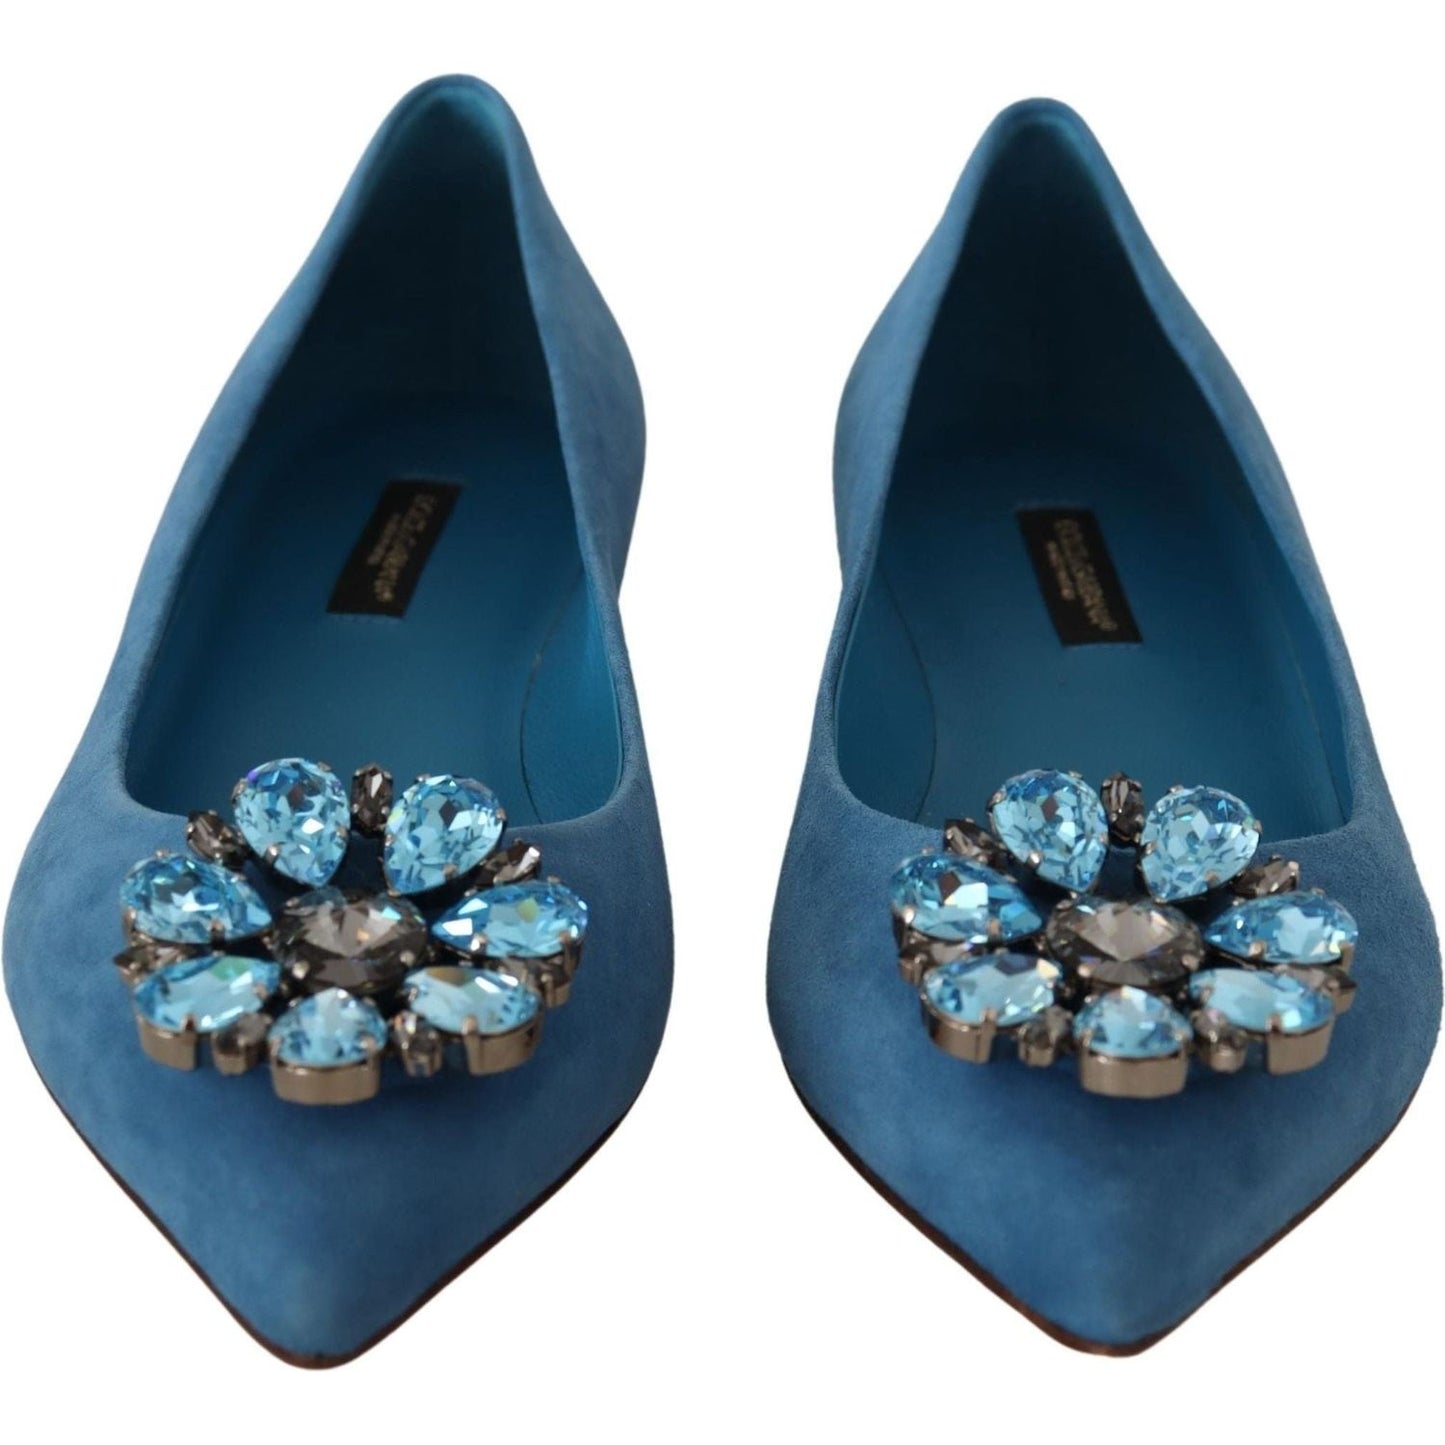 Dolce & Gabbana Elegant Crystal-Embellished Suede Flats blue-suede-crystals-loafers-flats-shoes IMG_5783-ee74ab6c-6e4.jpg